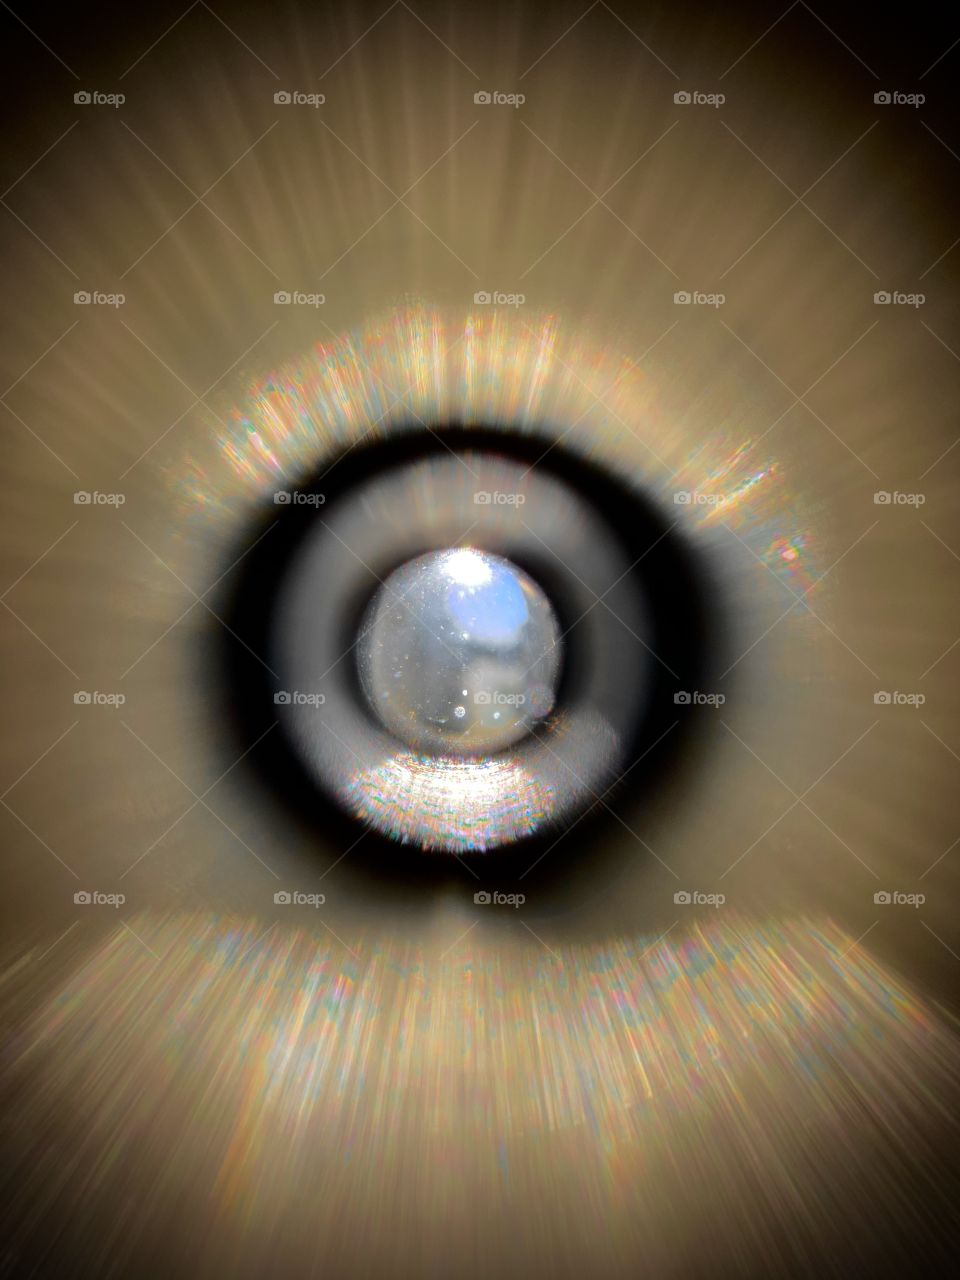 View through a front door peephole